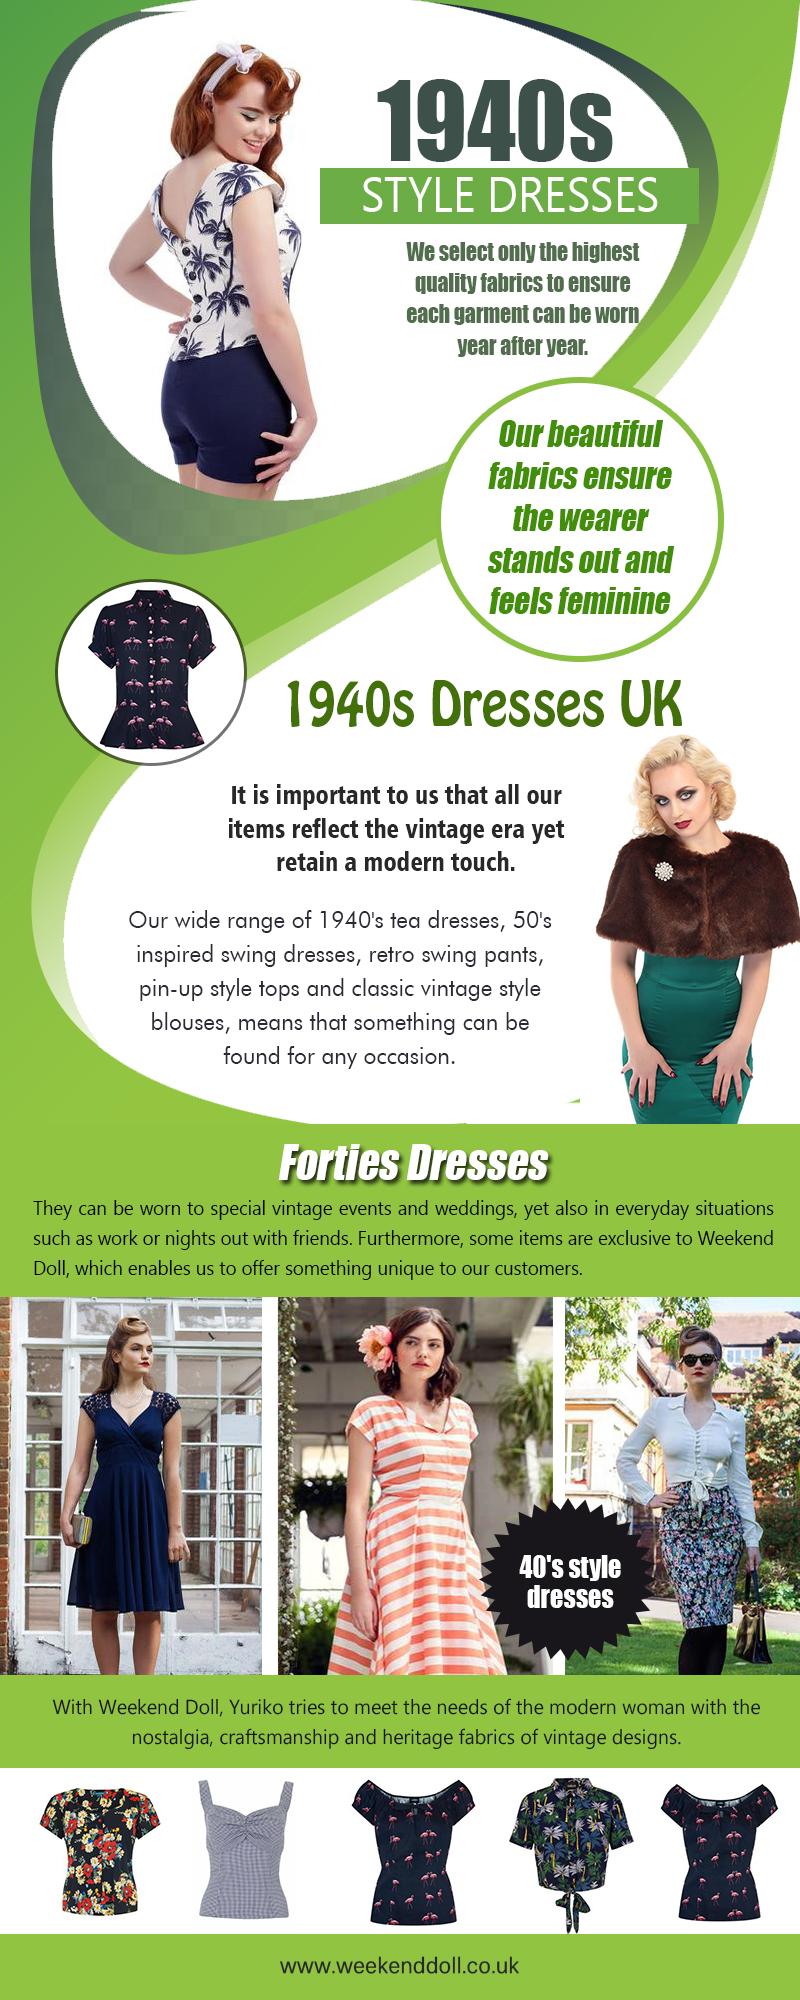 1940s Style Dresses